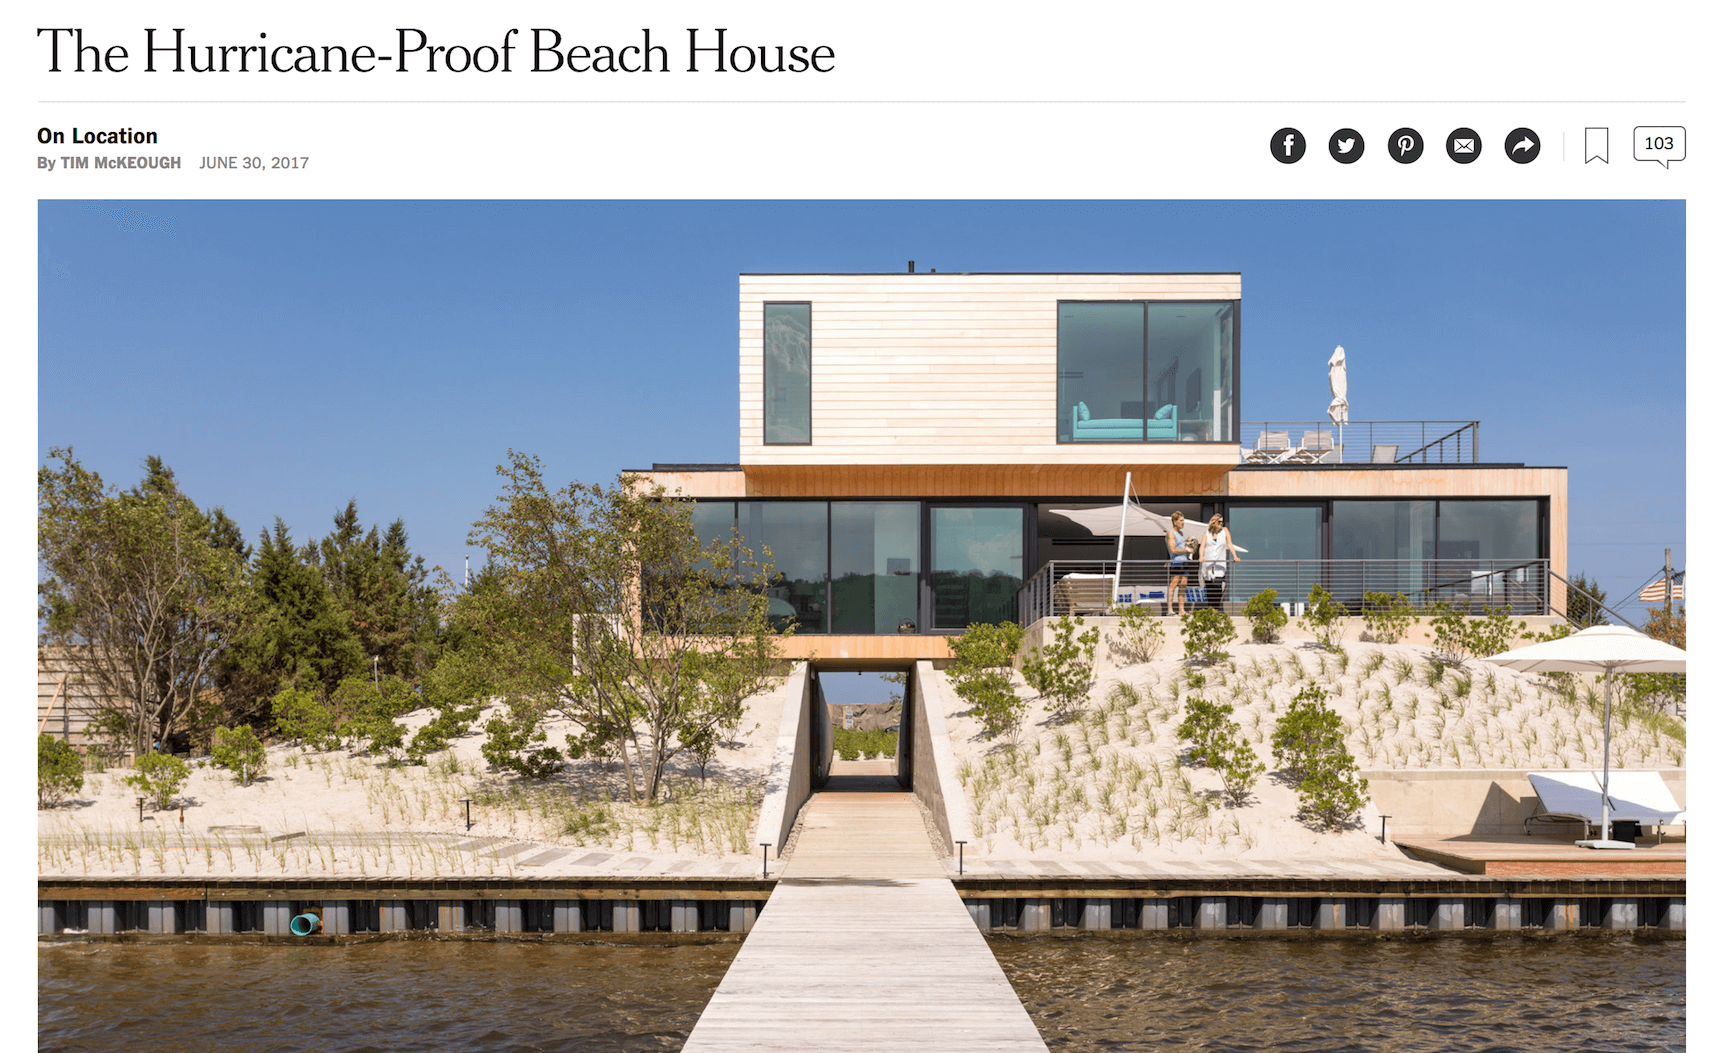 New Jersey Beach House Interior Design | NY Times